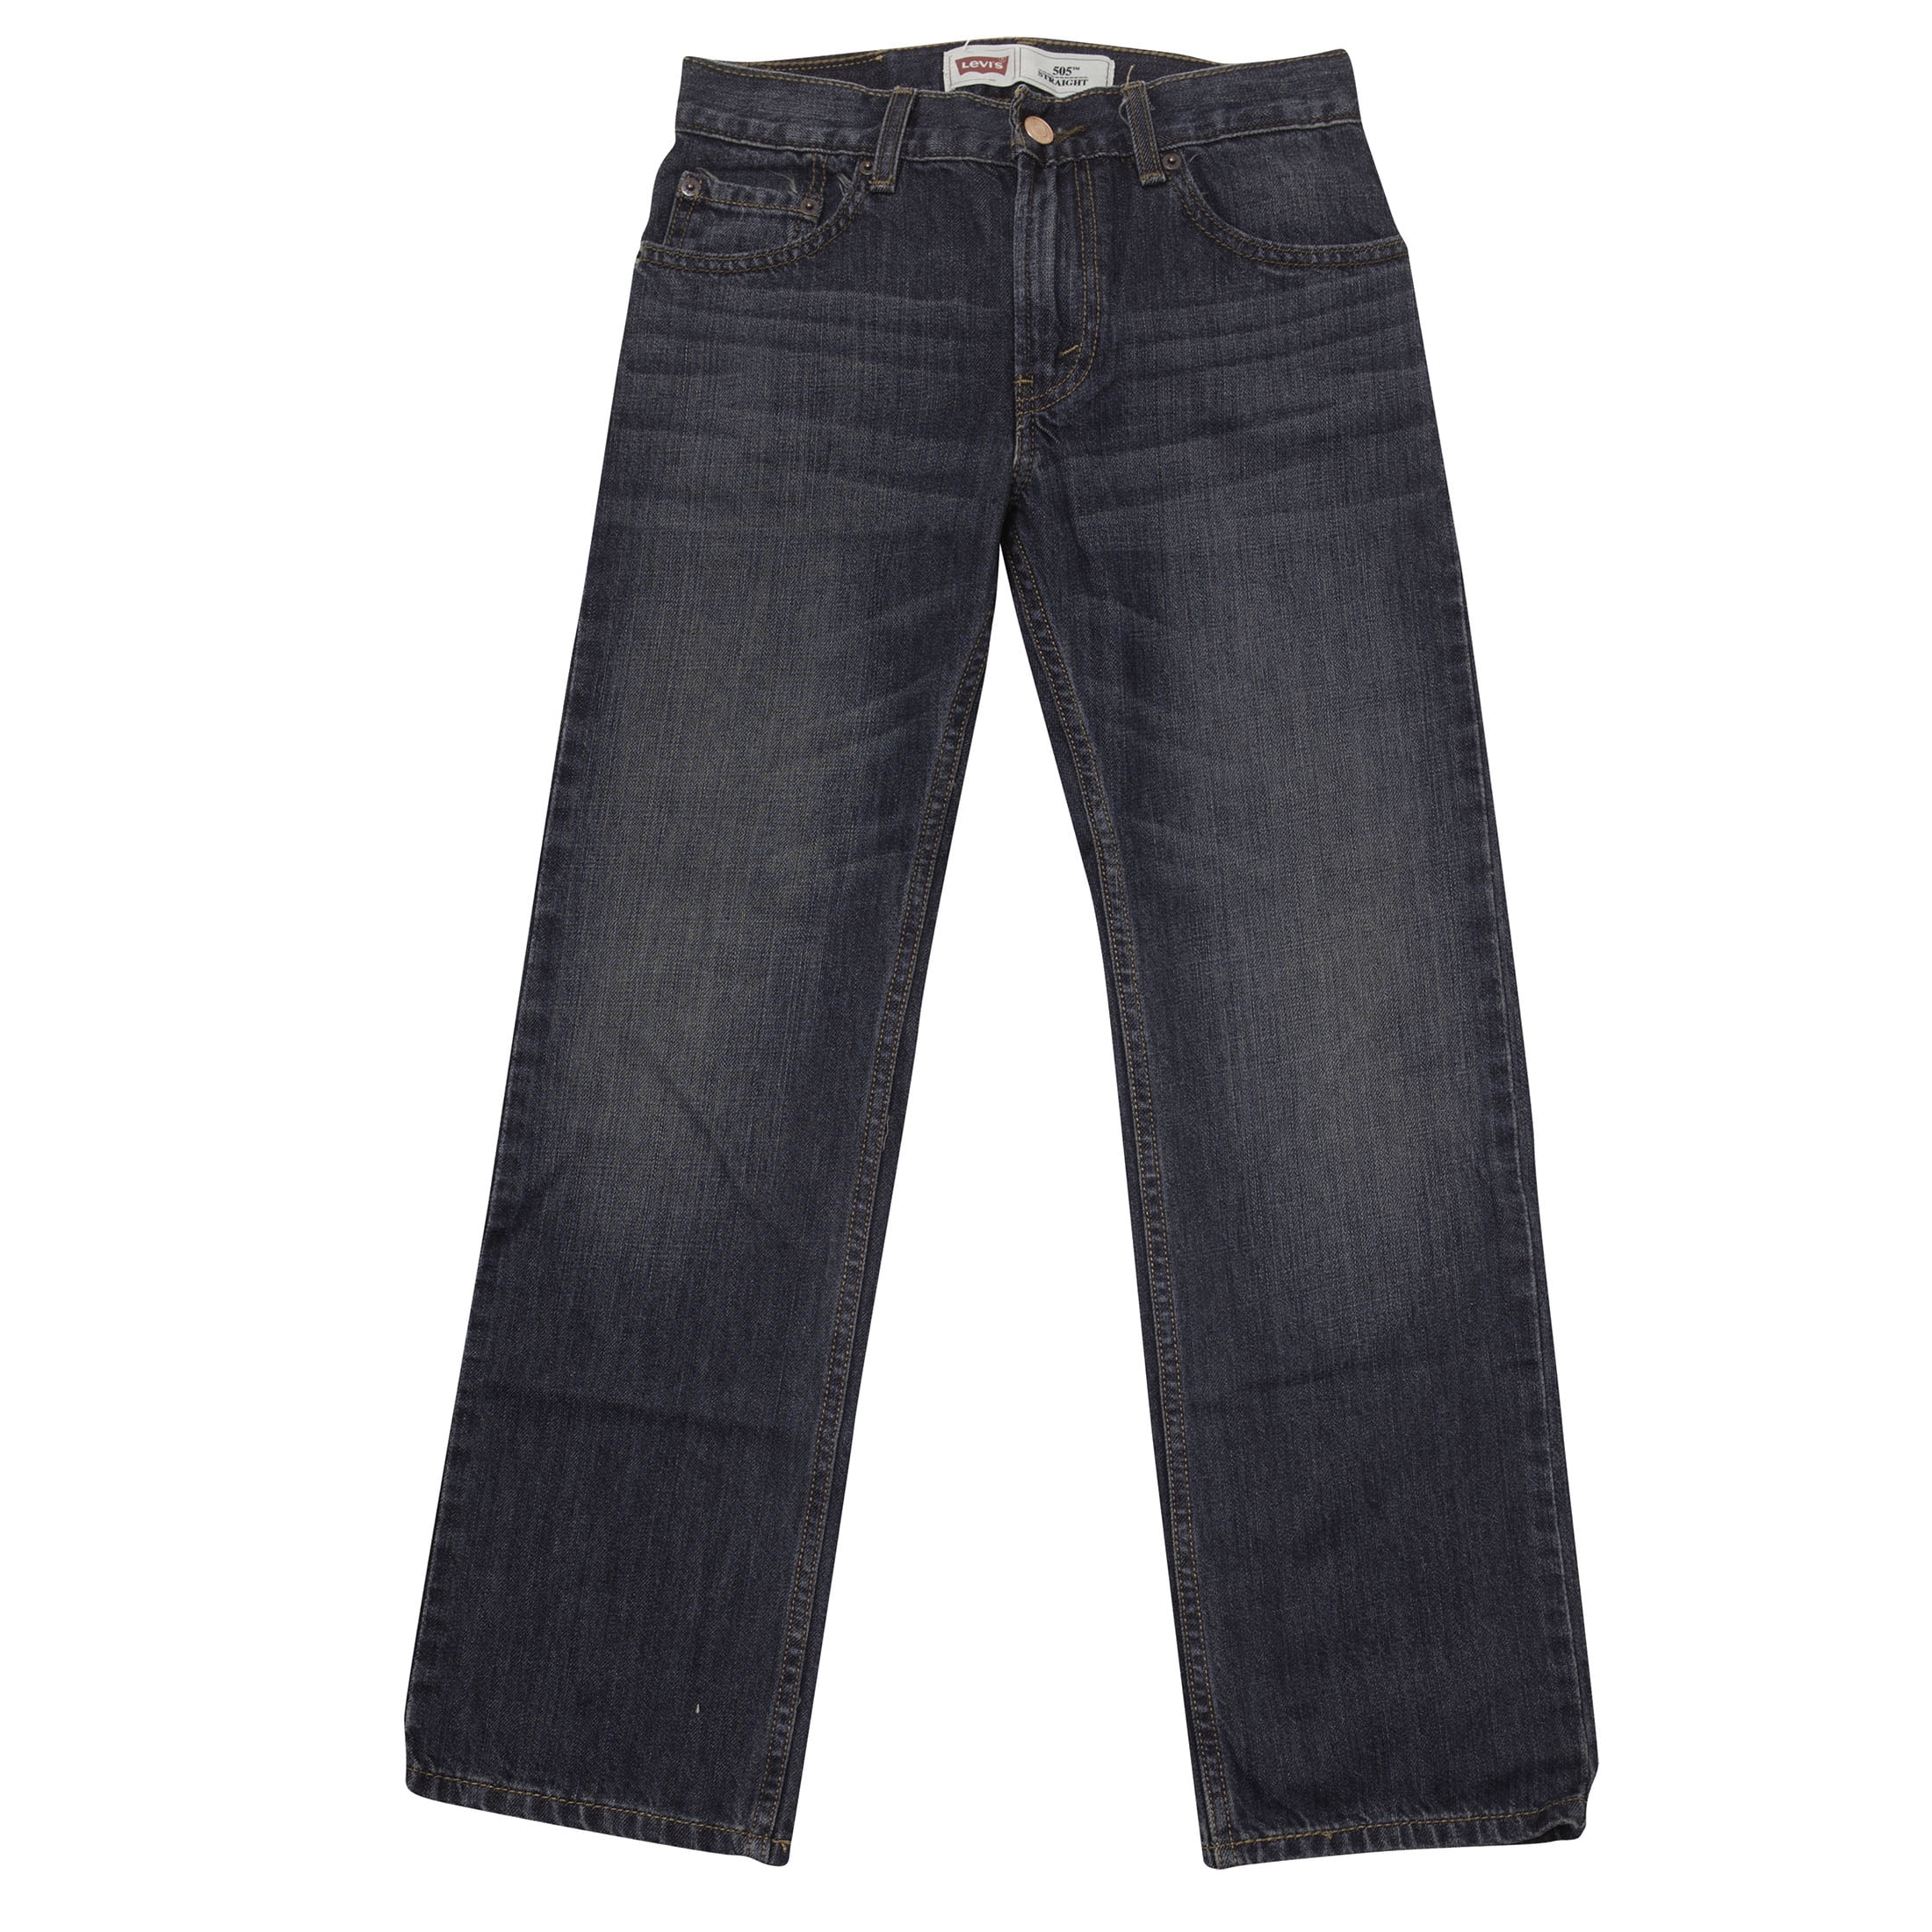 Levi's Boys' 505 Regular Fit Jeans, Sizes 4-20 